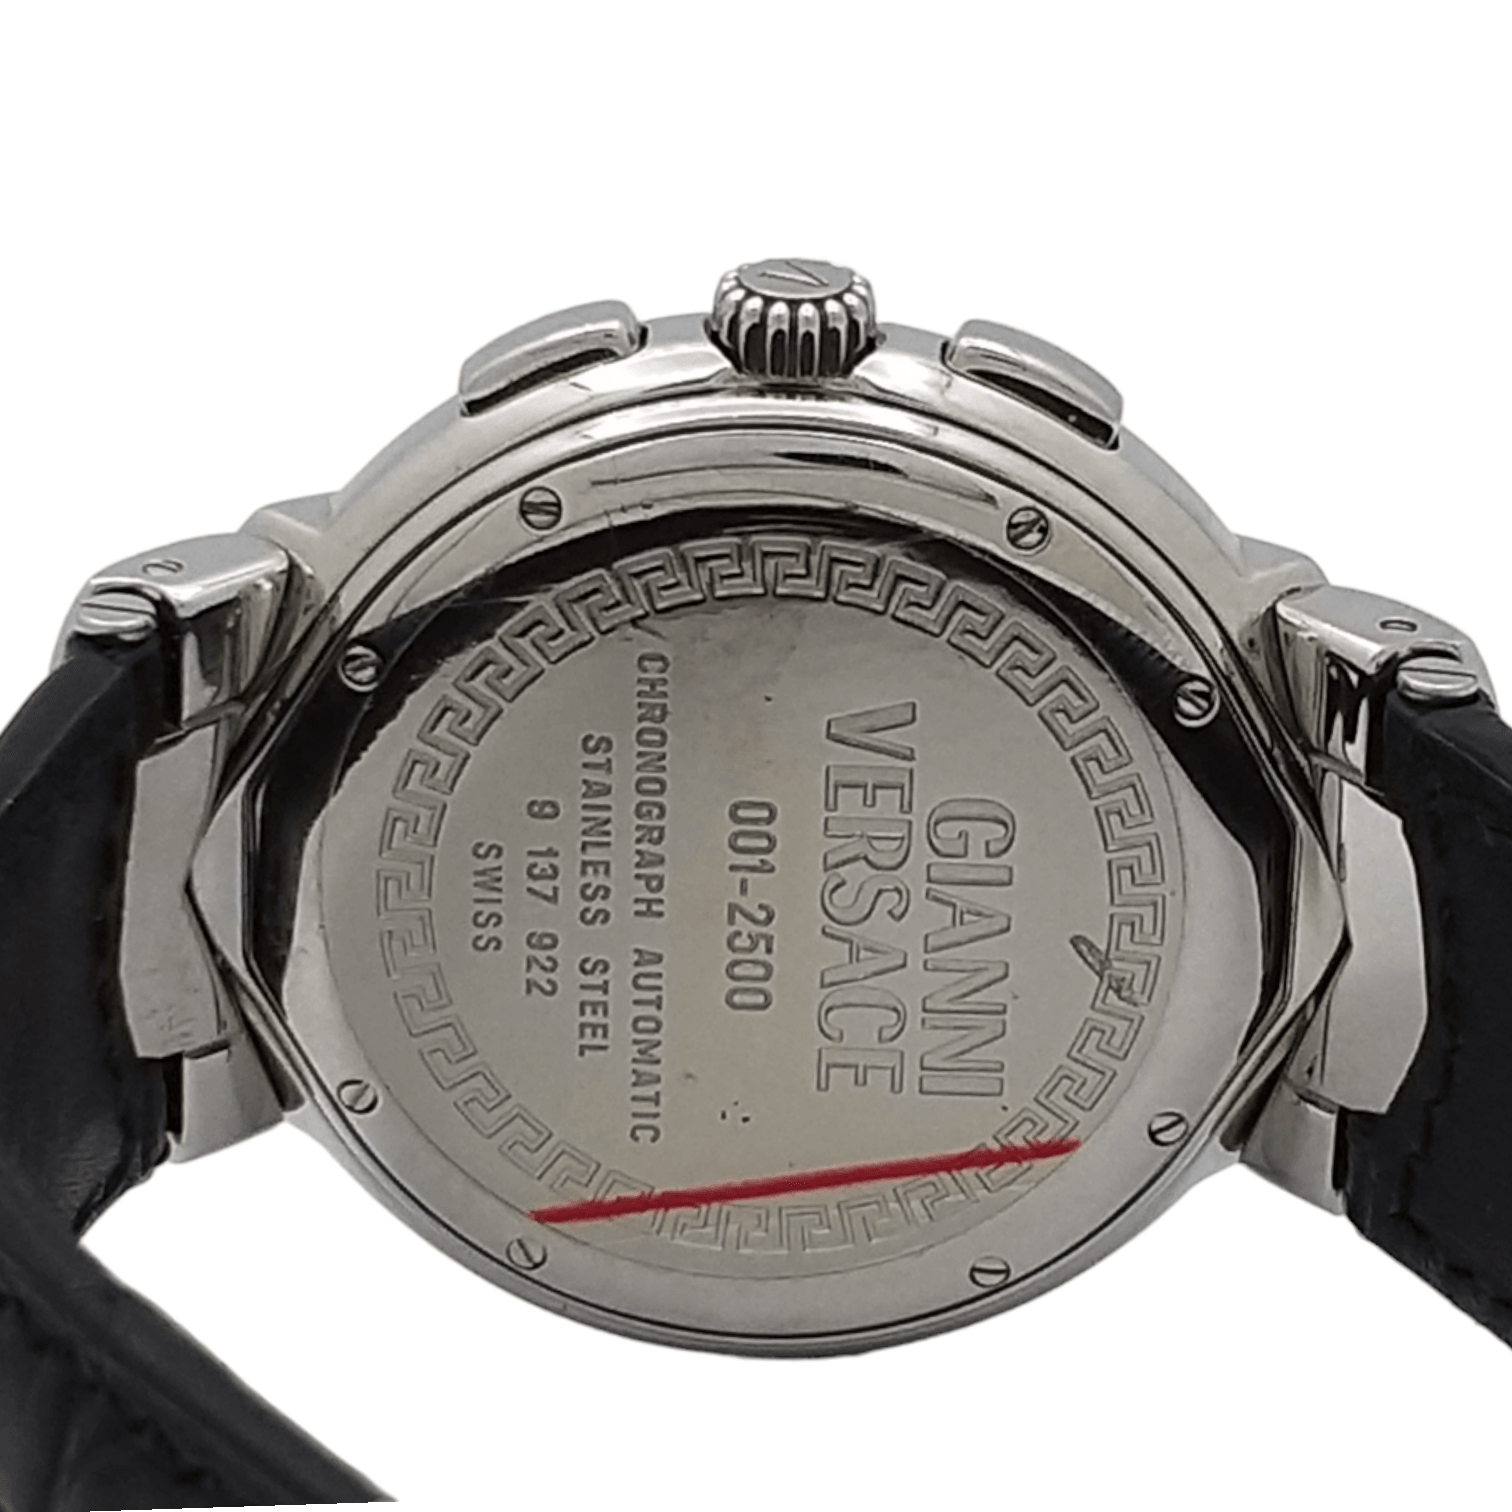 Gianni Versace Medusa 363 Automatic Chronograph Ref. 001-2500 - ON839 - LuxuryInStock